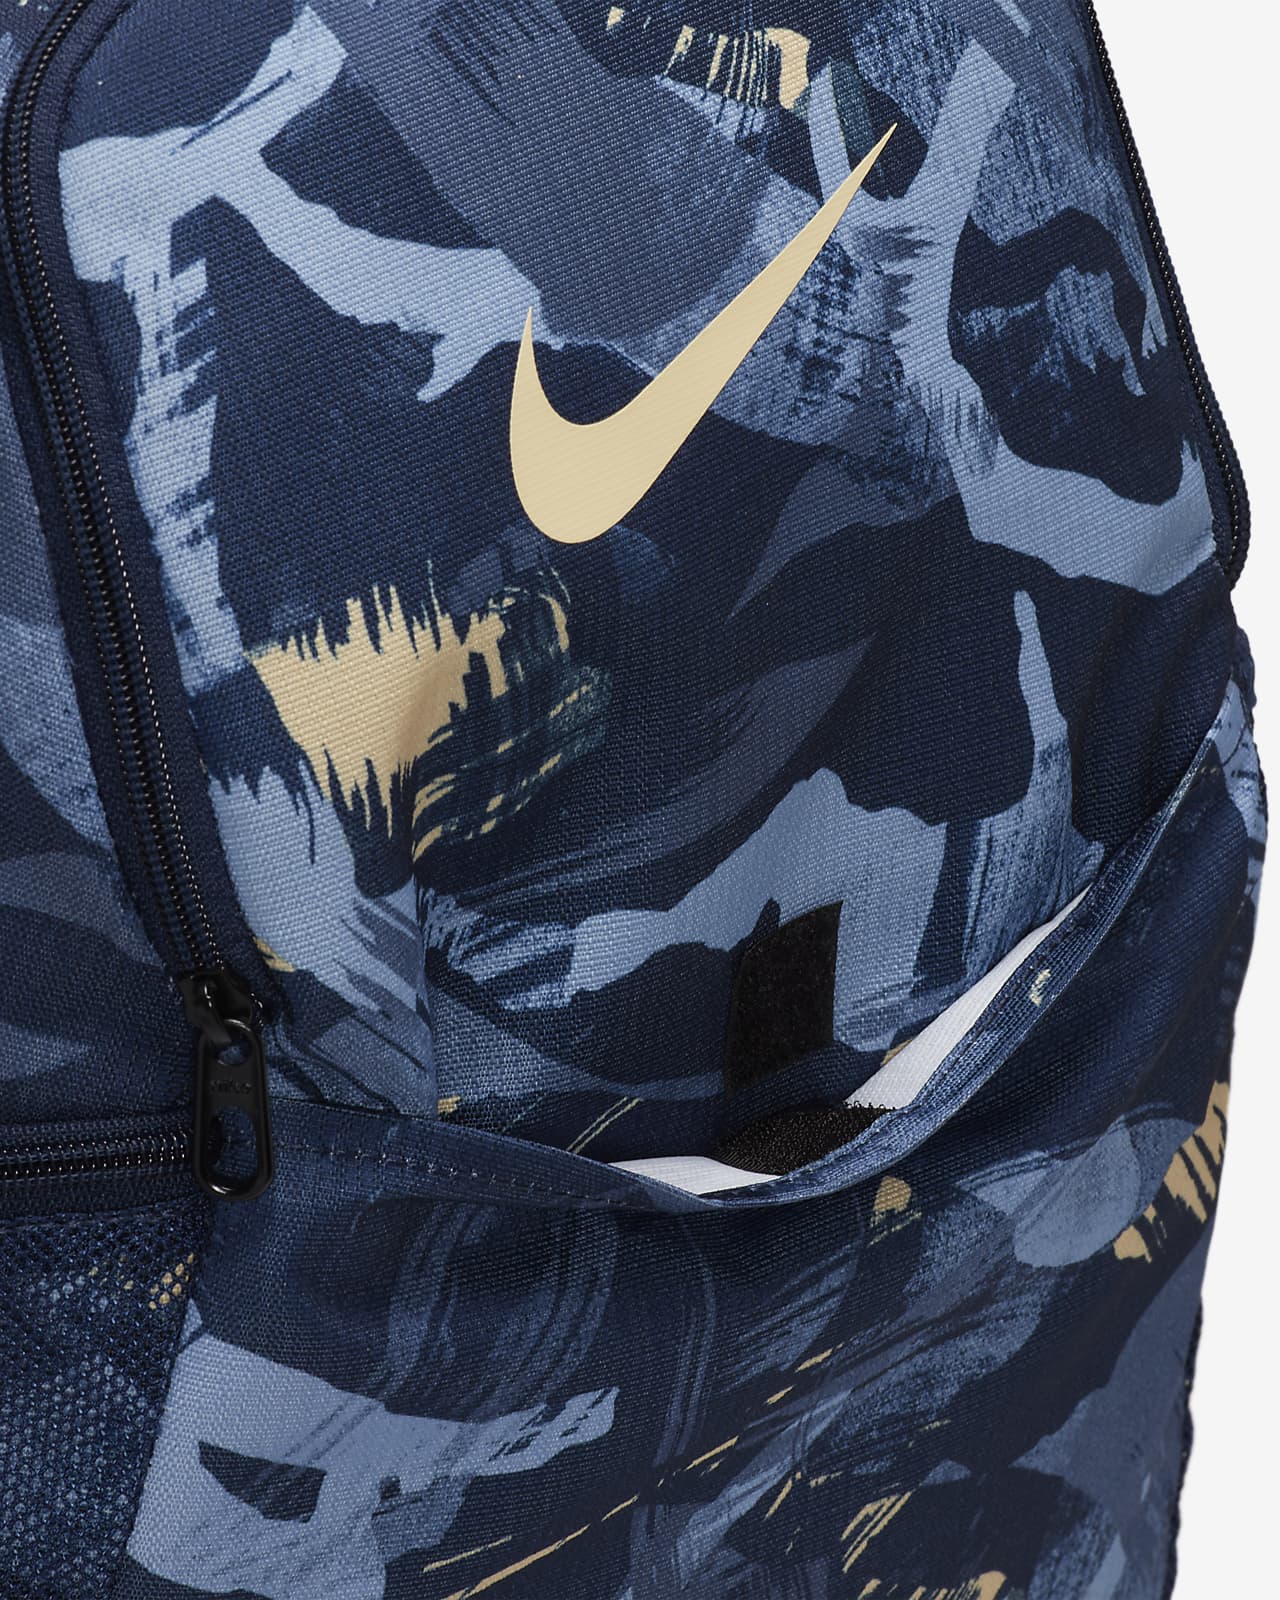 Nike Brasilia Backpack (Medium, 24L).